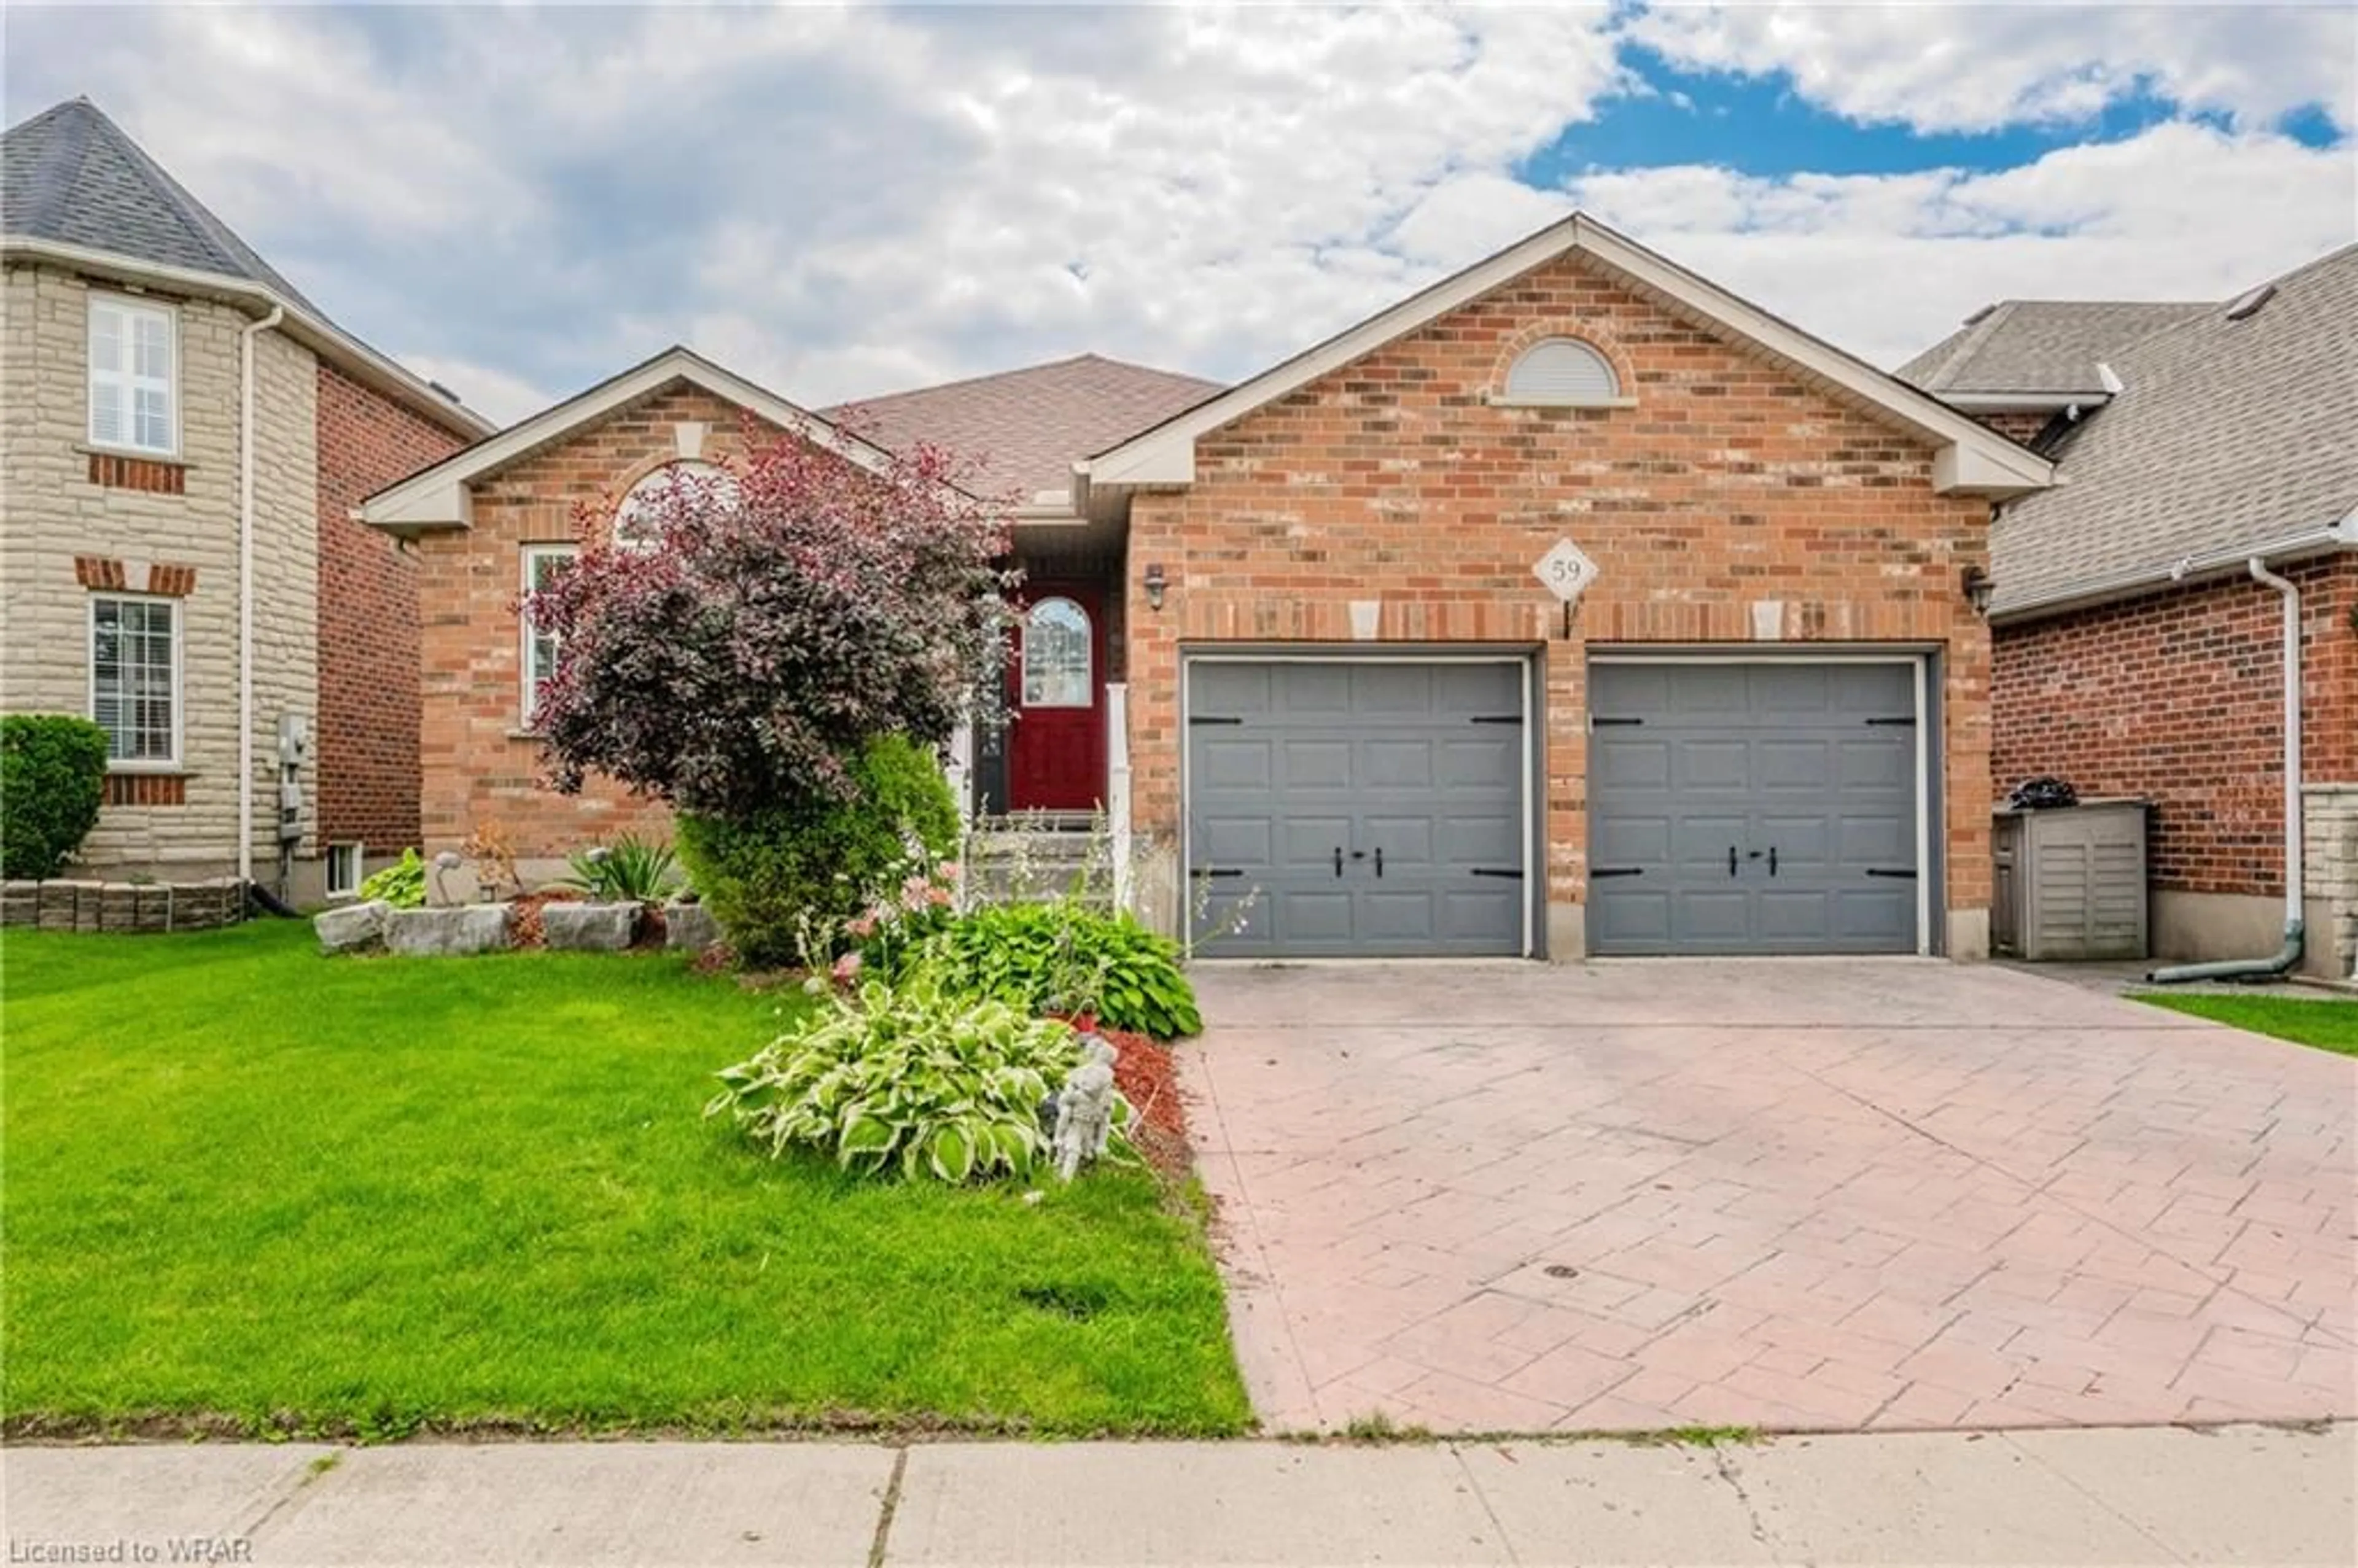 Home with brick exterior material for 59 Lavender Rd, Cambridge Ontario N1P 1E1